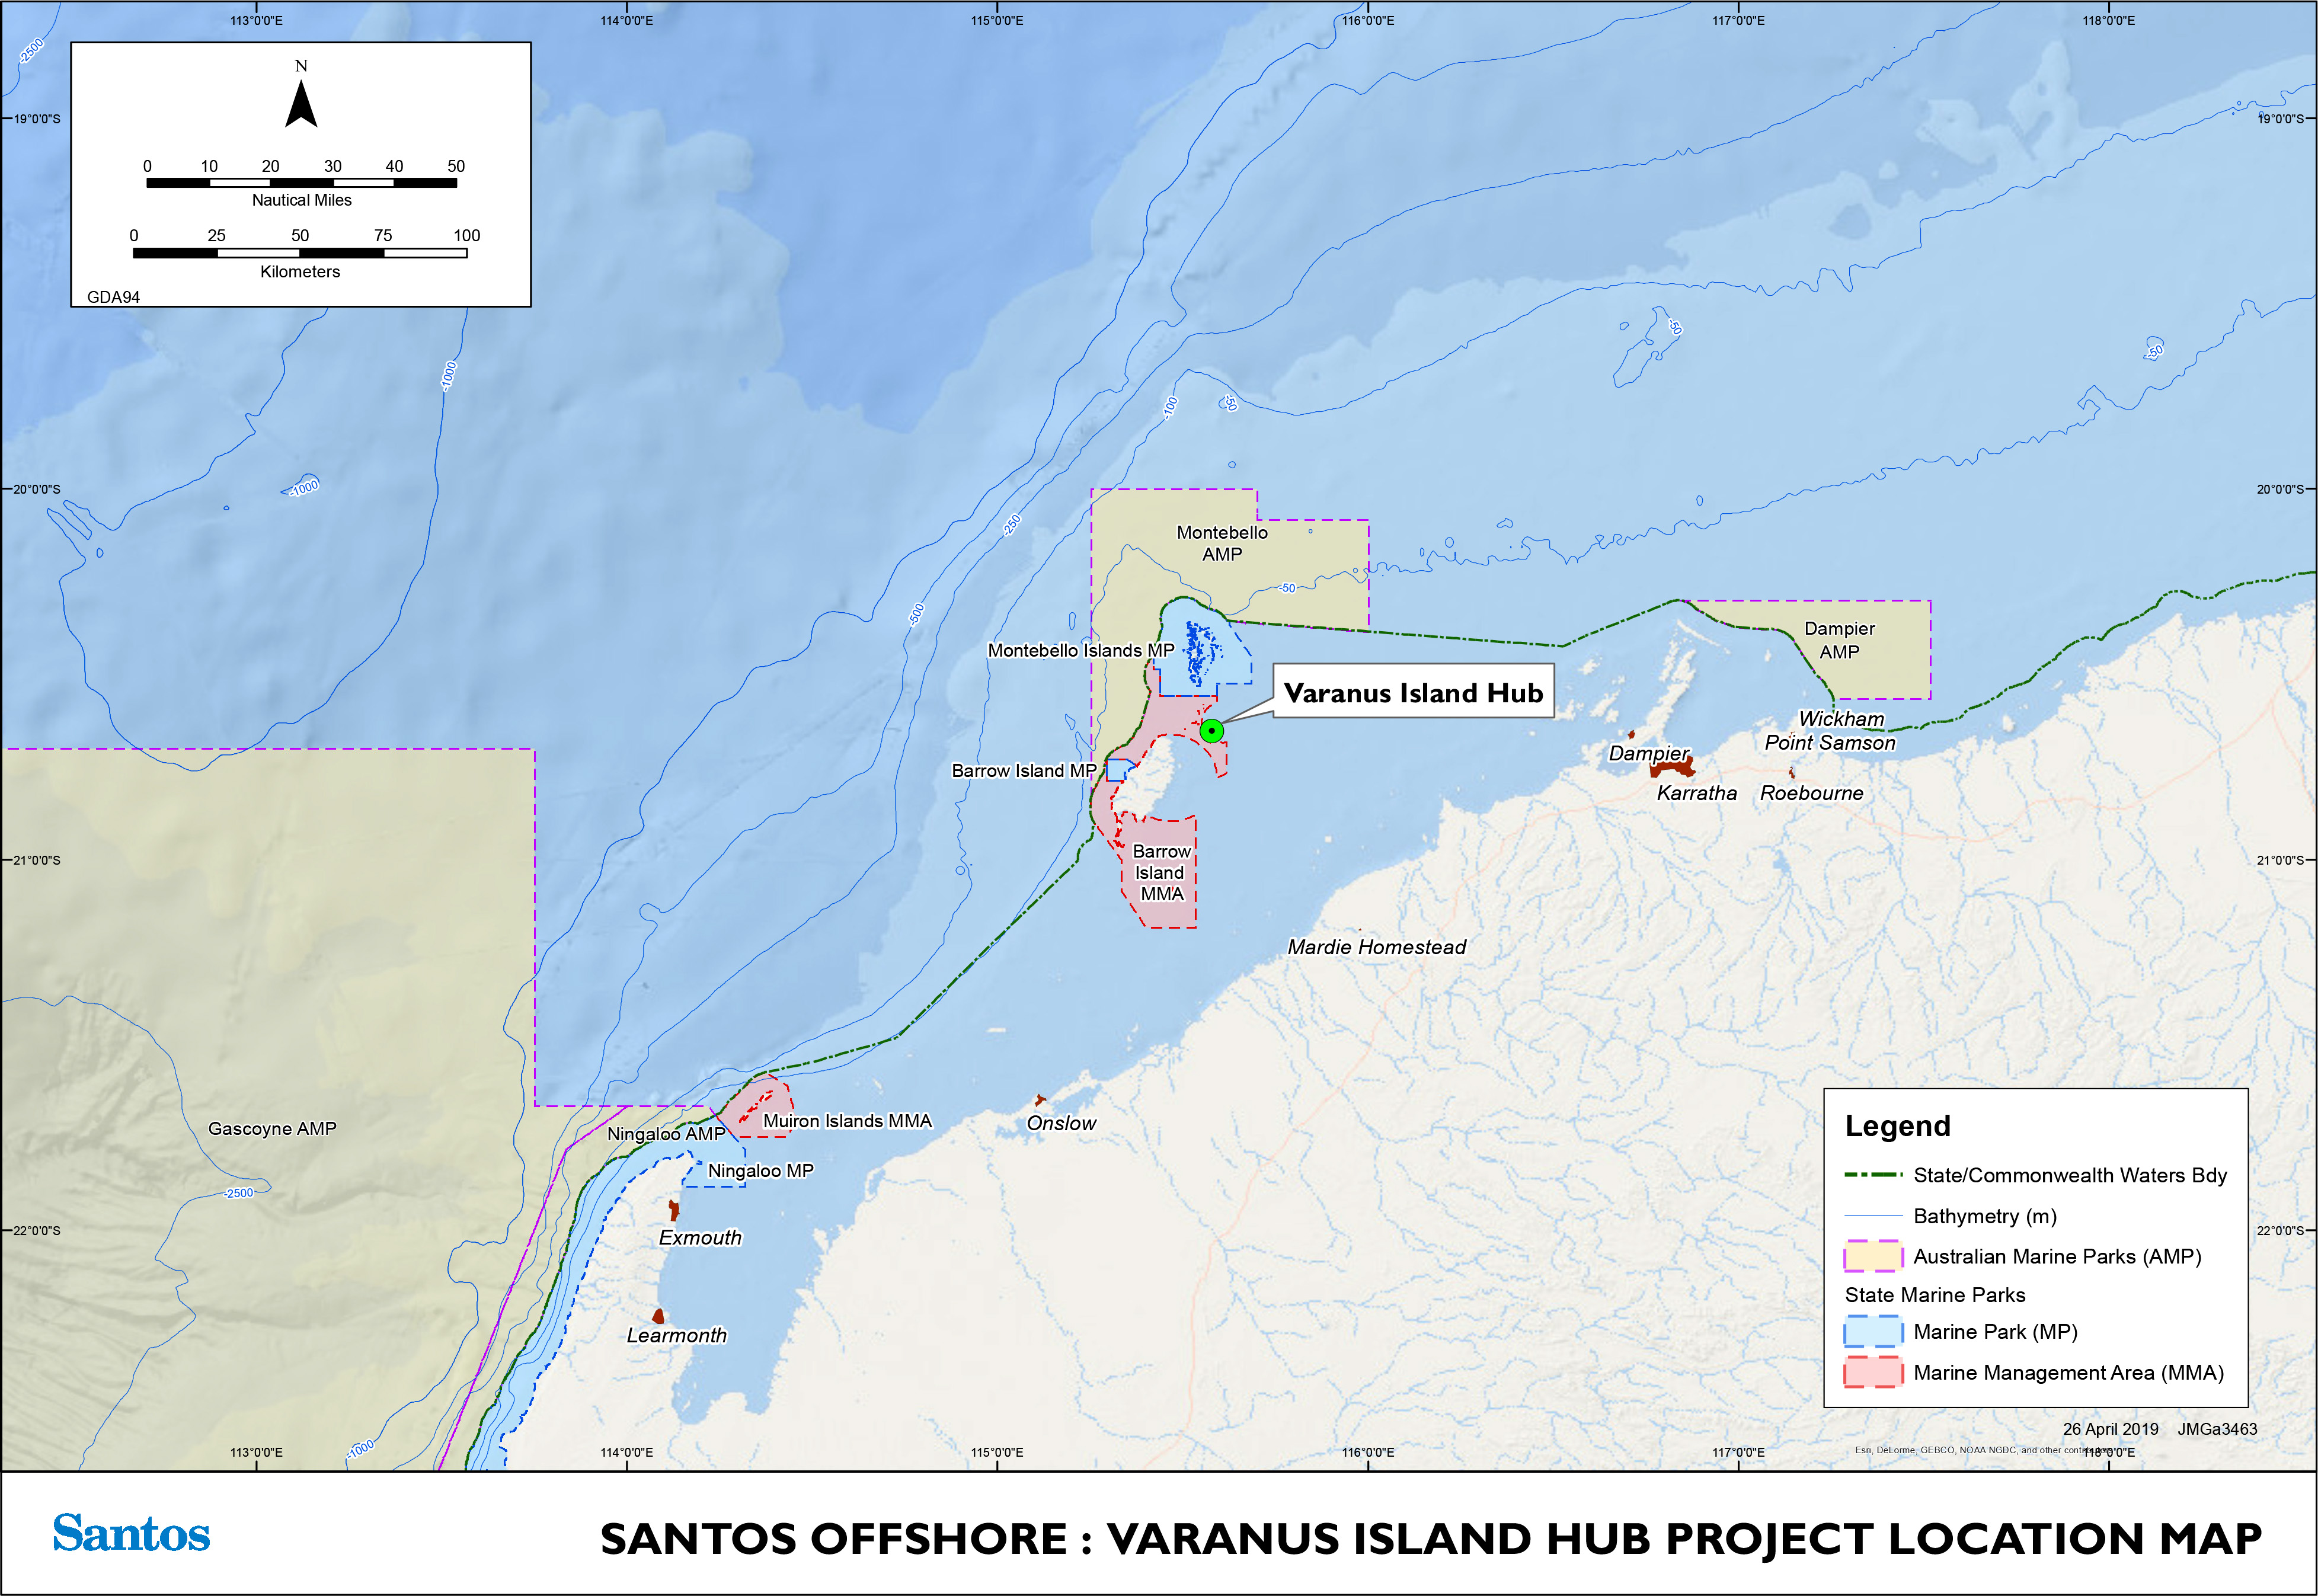 Project map - Varanus Island Hub (refer to Description)